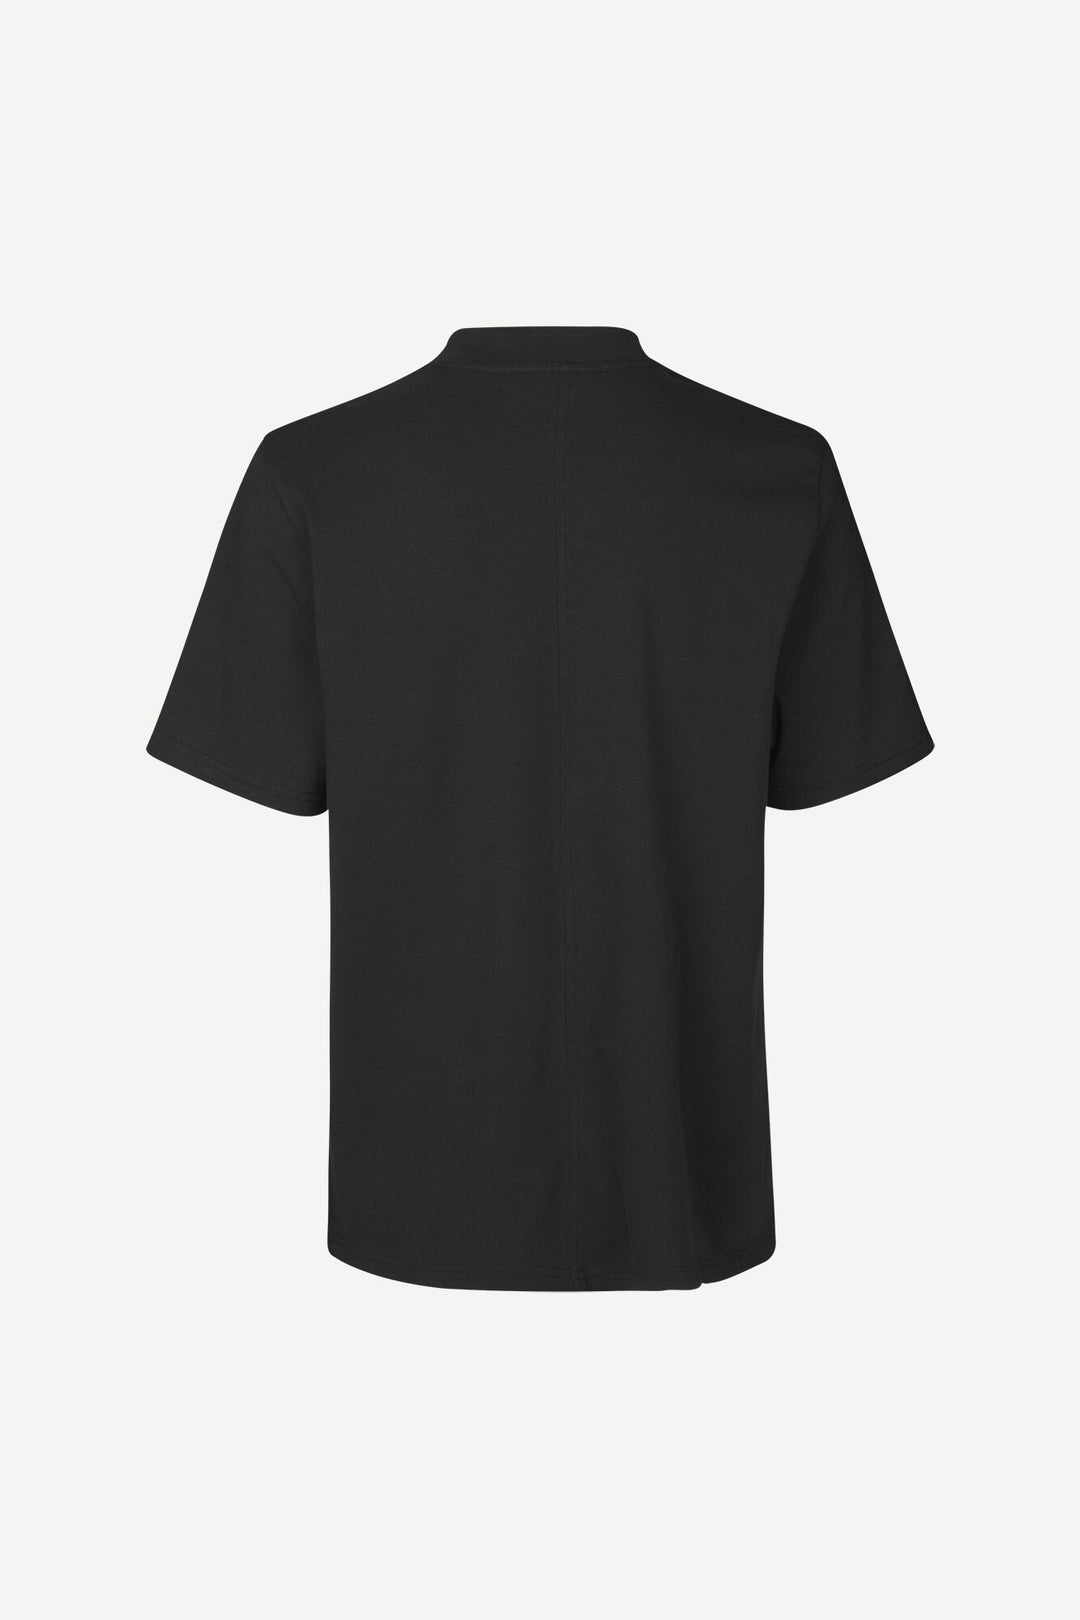 Norsbro t-shirt - black